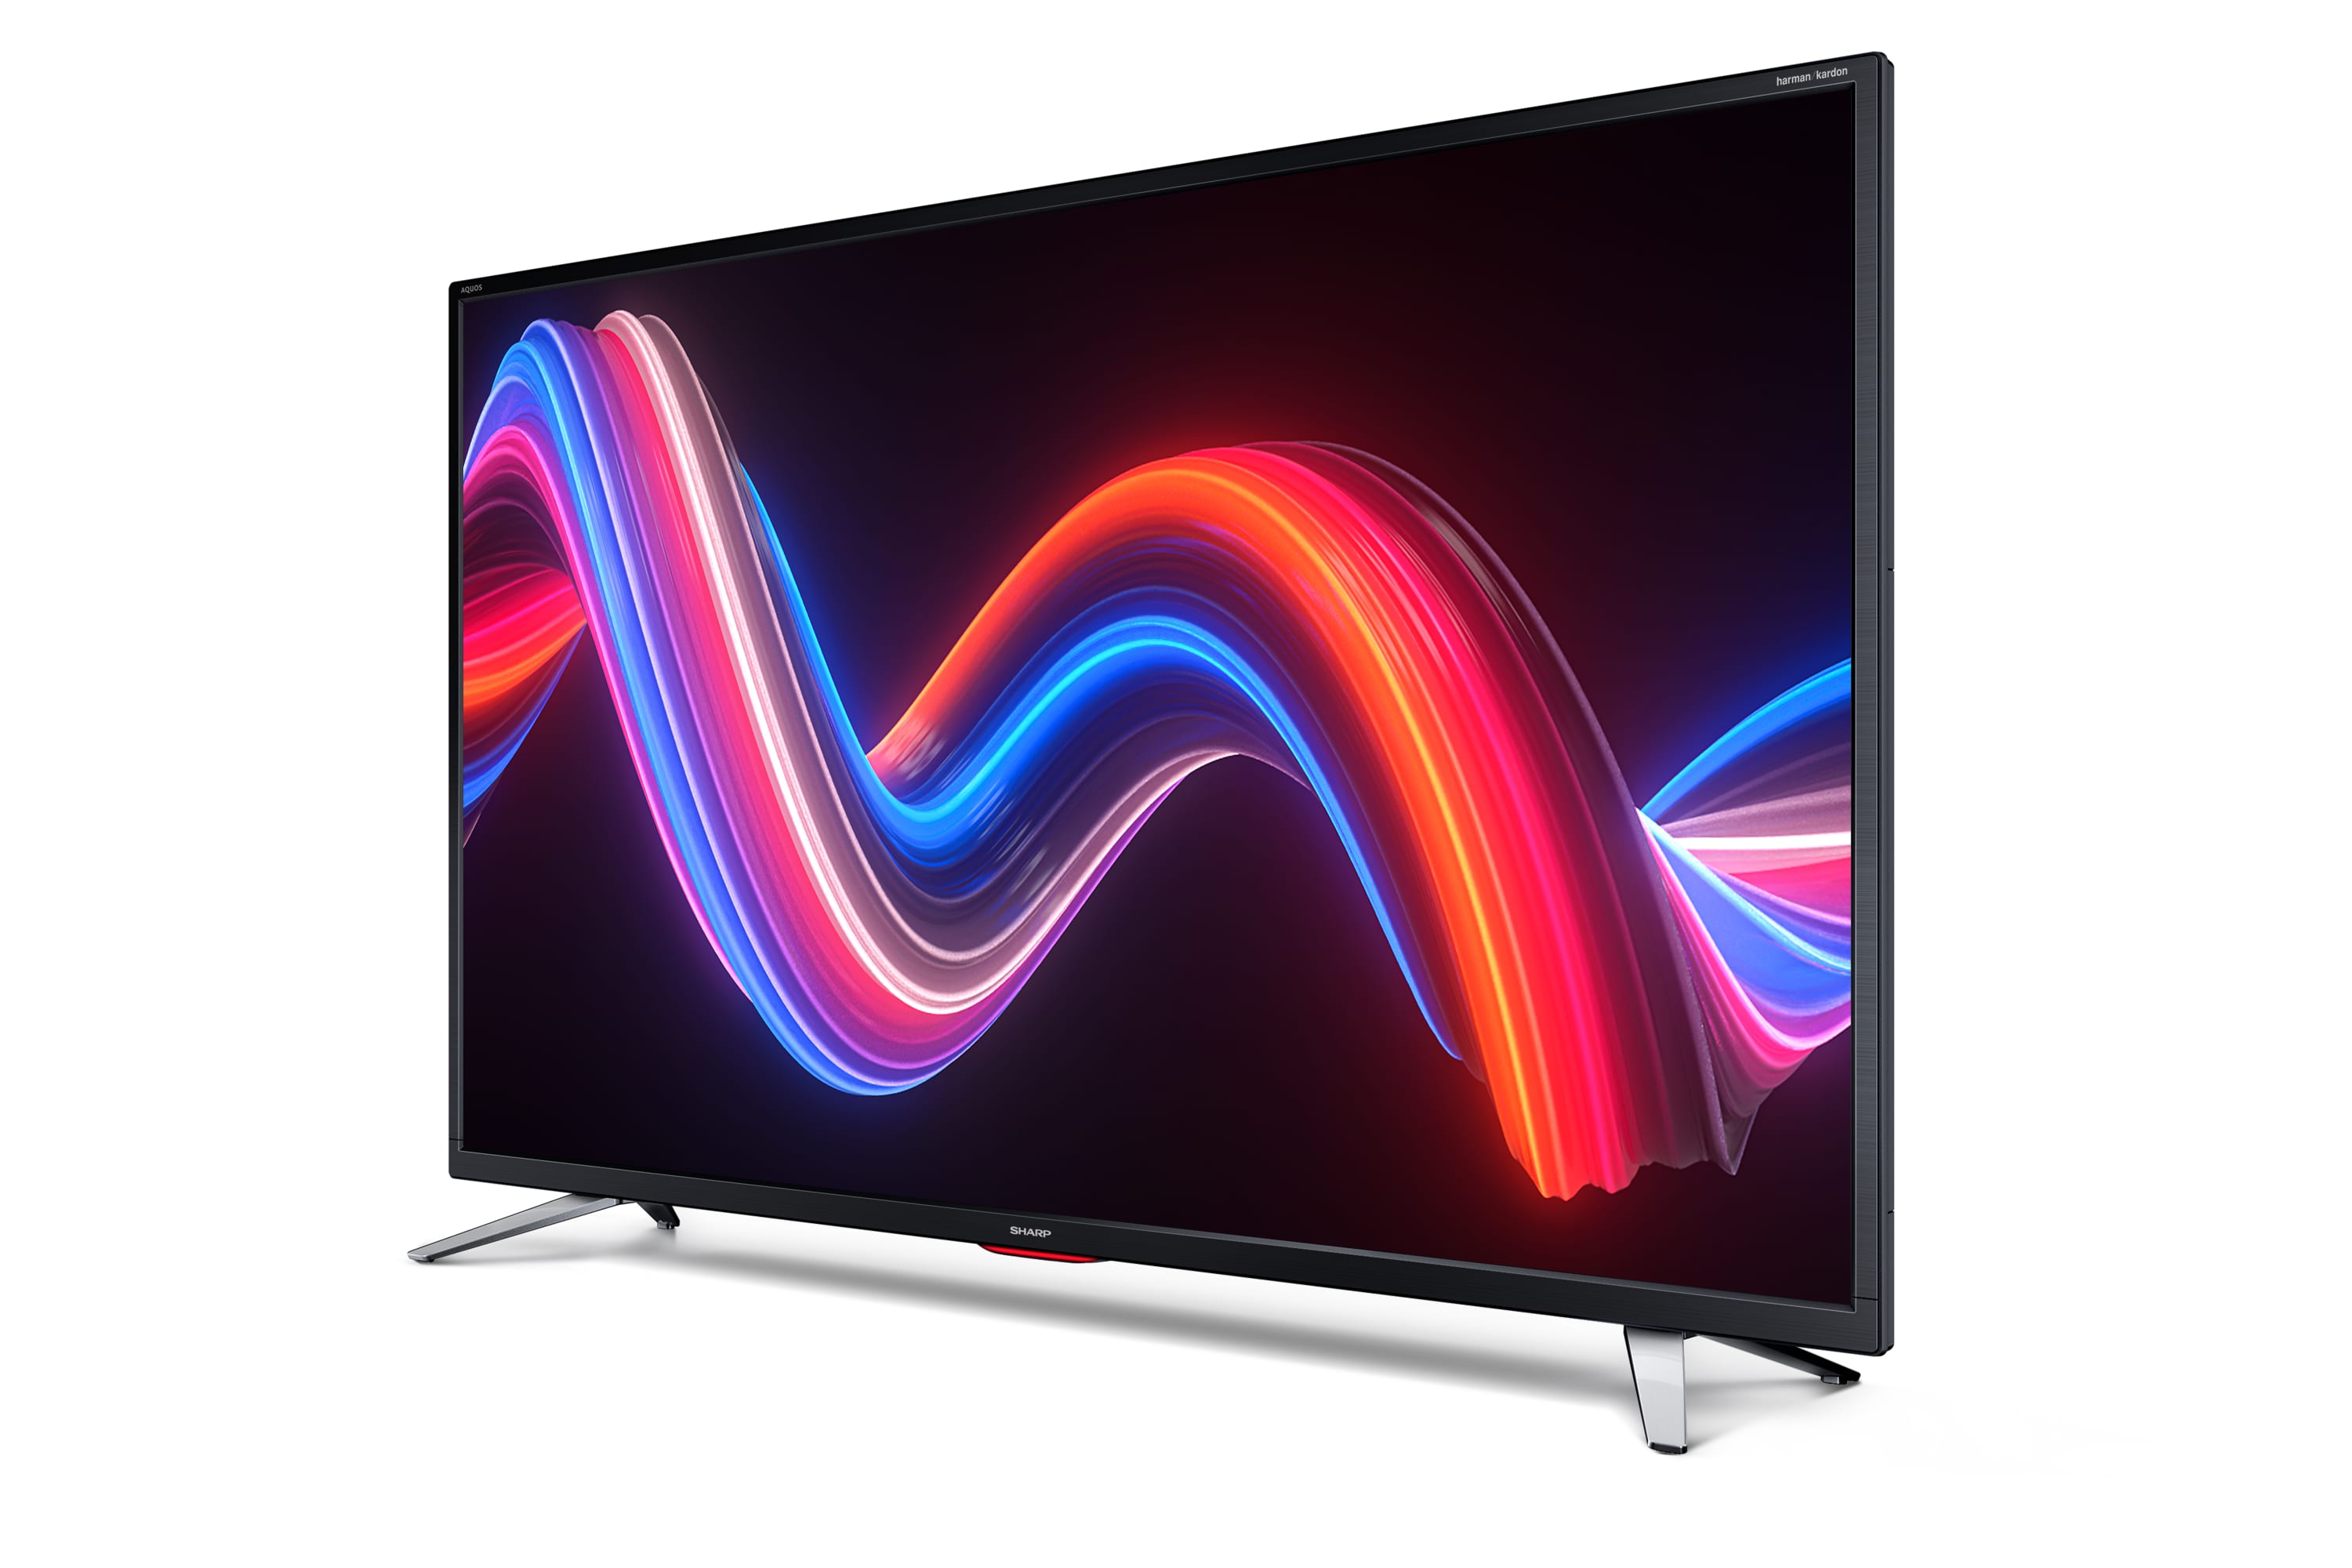 Smart-TV, HD/Full HD - 42" FULL HD SMART TV